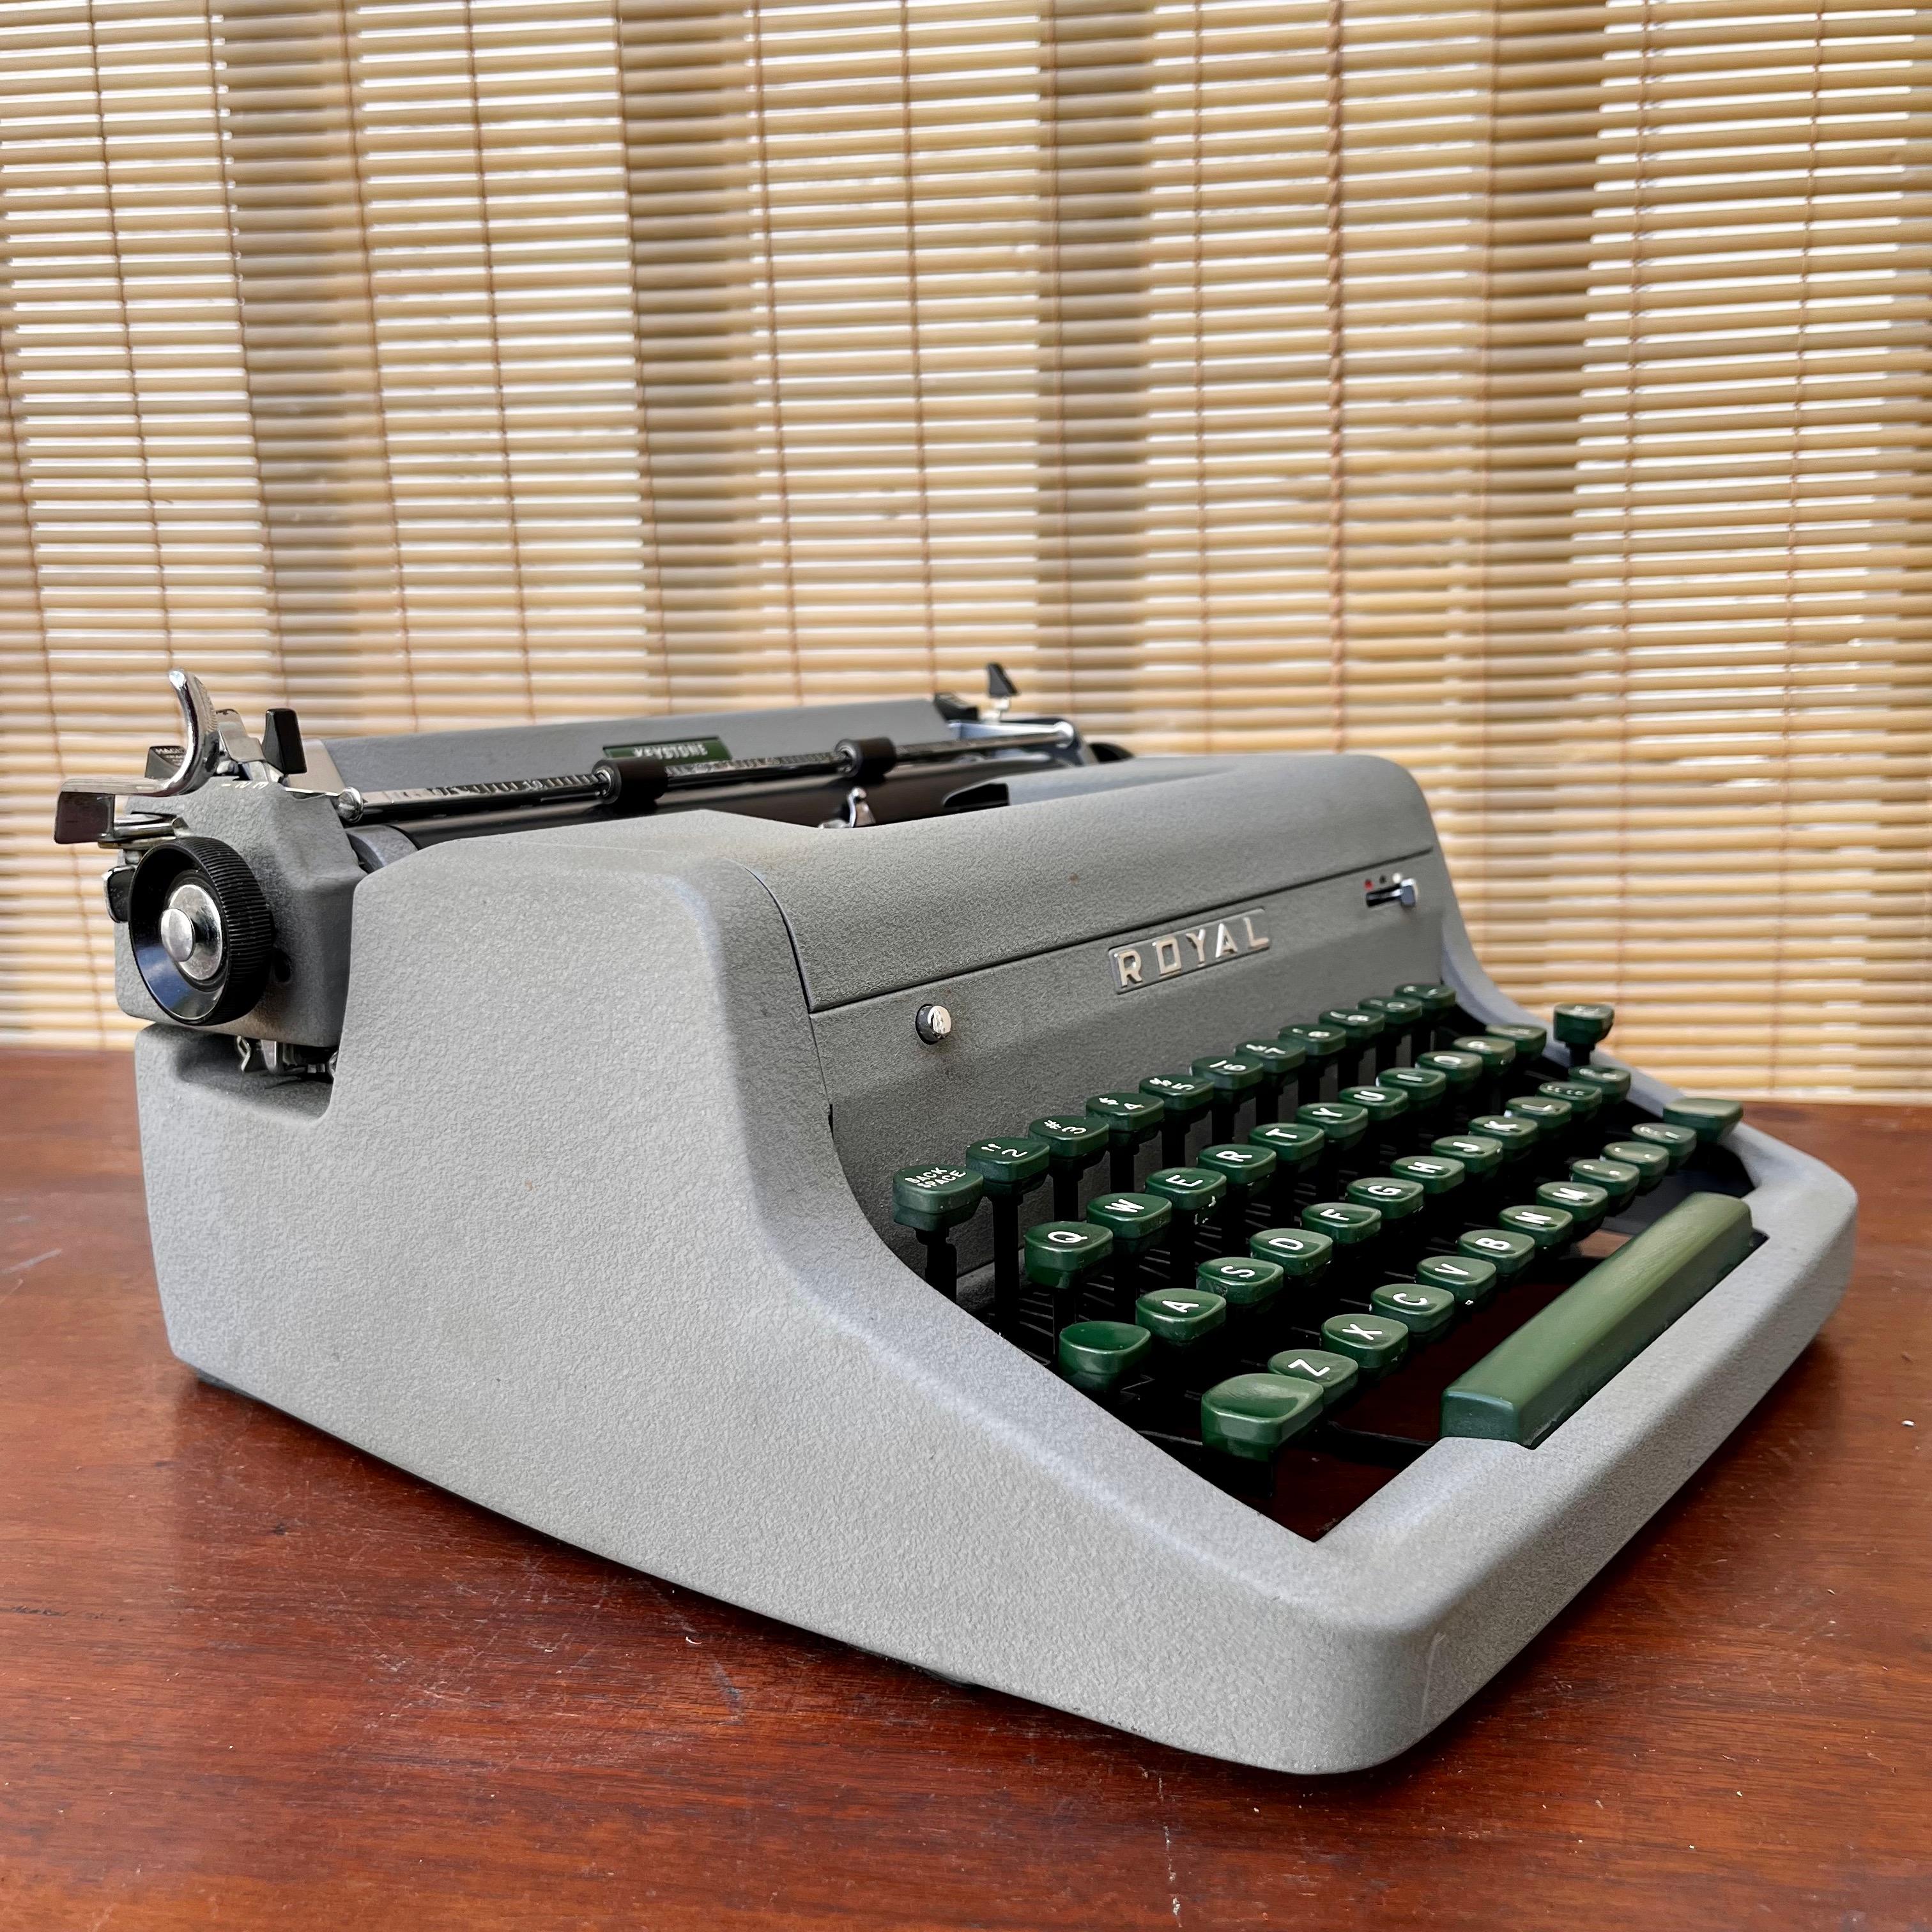 American 1950s Mid-Century Modern Royal Keystone Portable Typewriter with Case